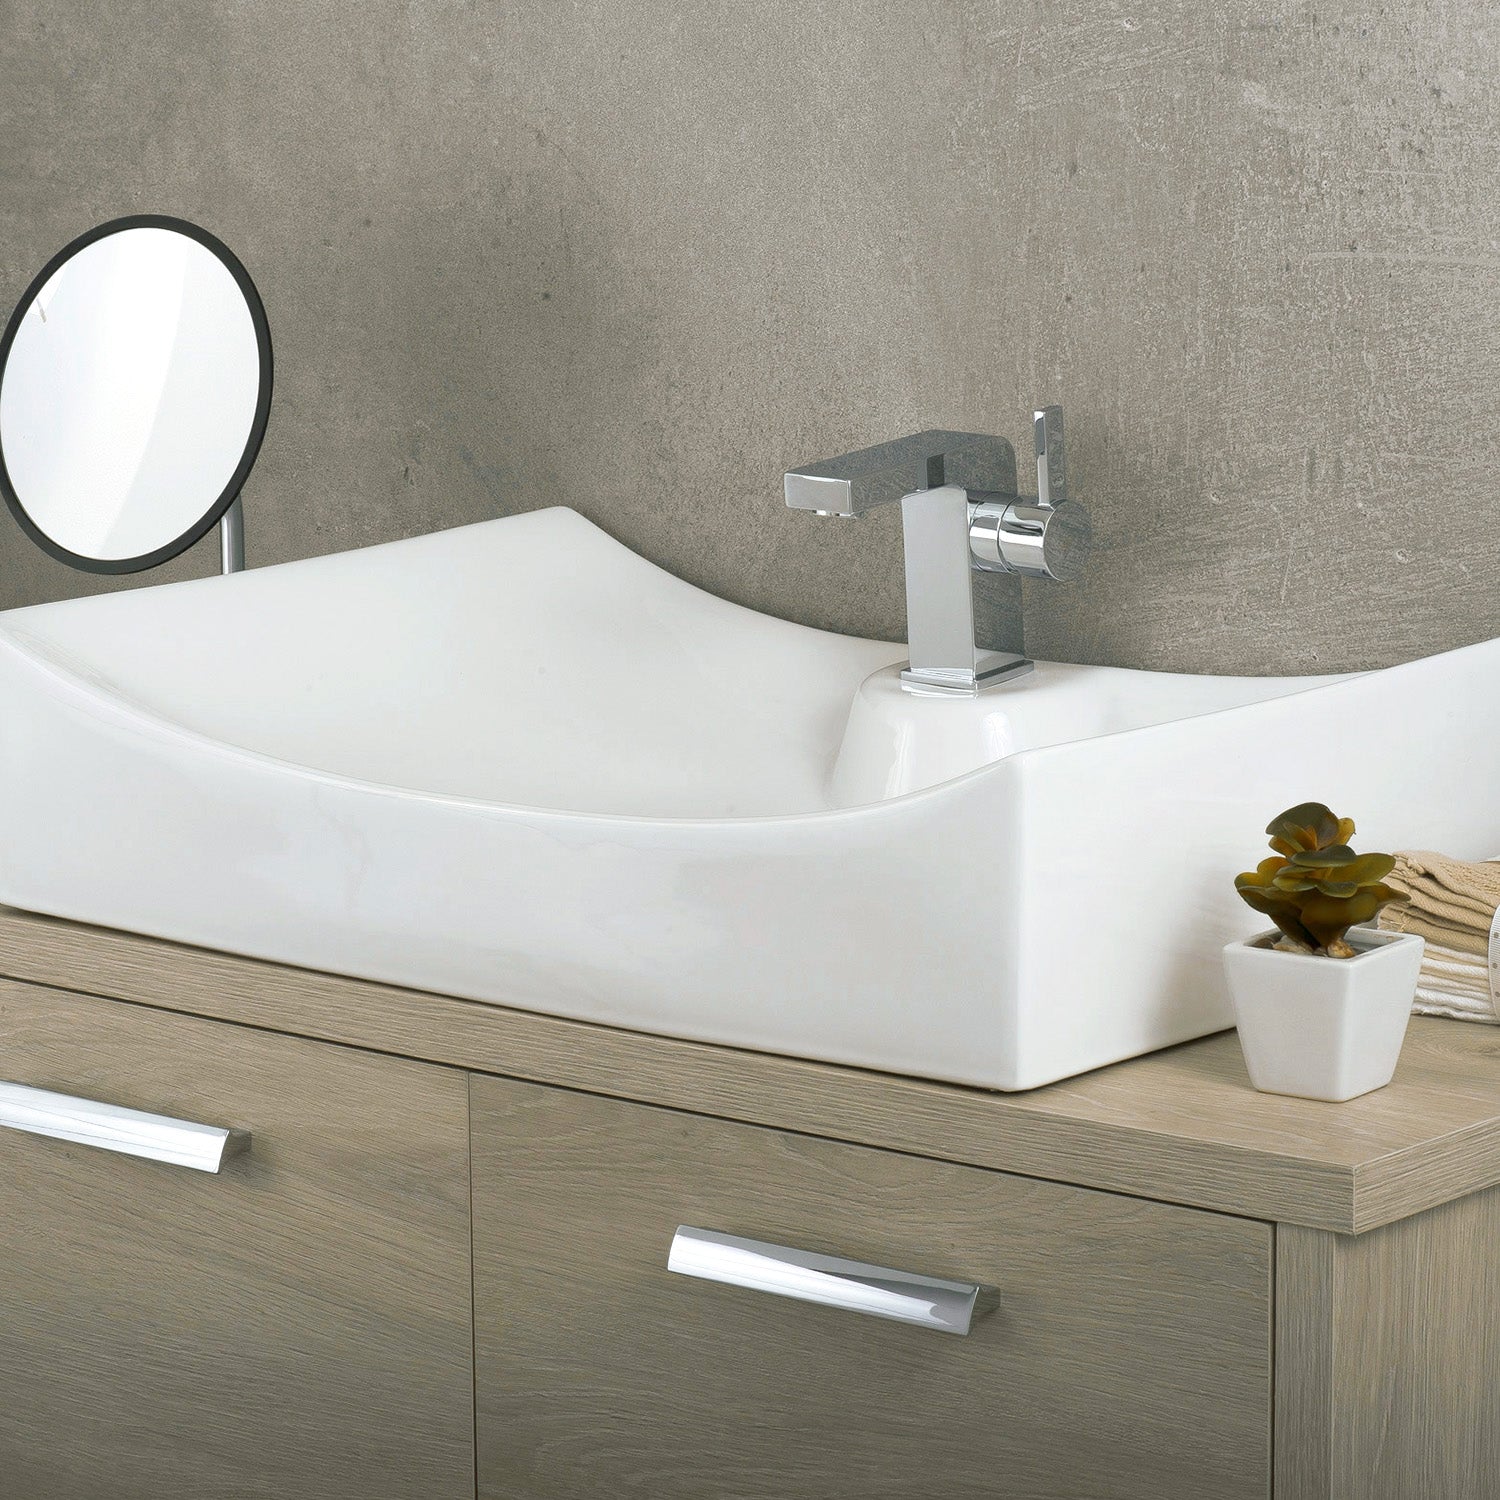 DAX Ceramic Rectangle Single Bowl Bathroom Vessel Sink, White Finish, 27-1/8 x 16-1/8 x 5-1/4 Inches (BSN-280A)